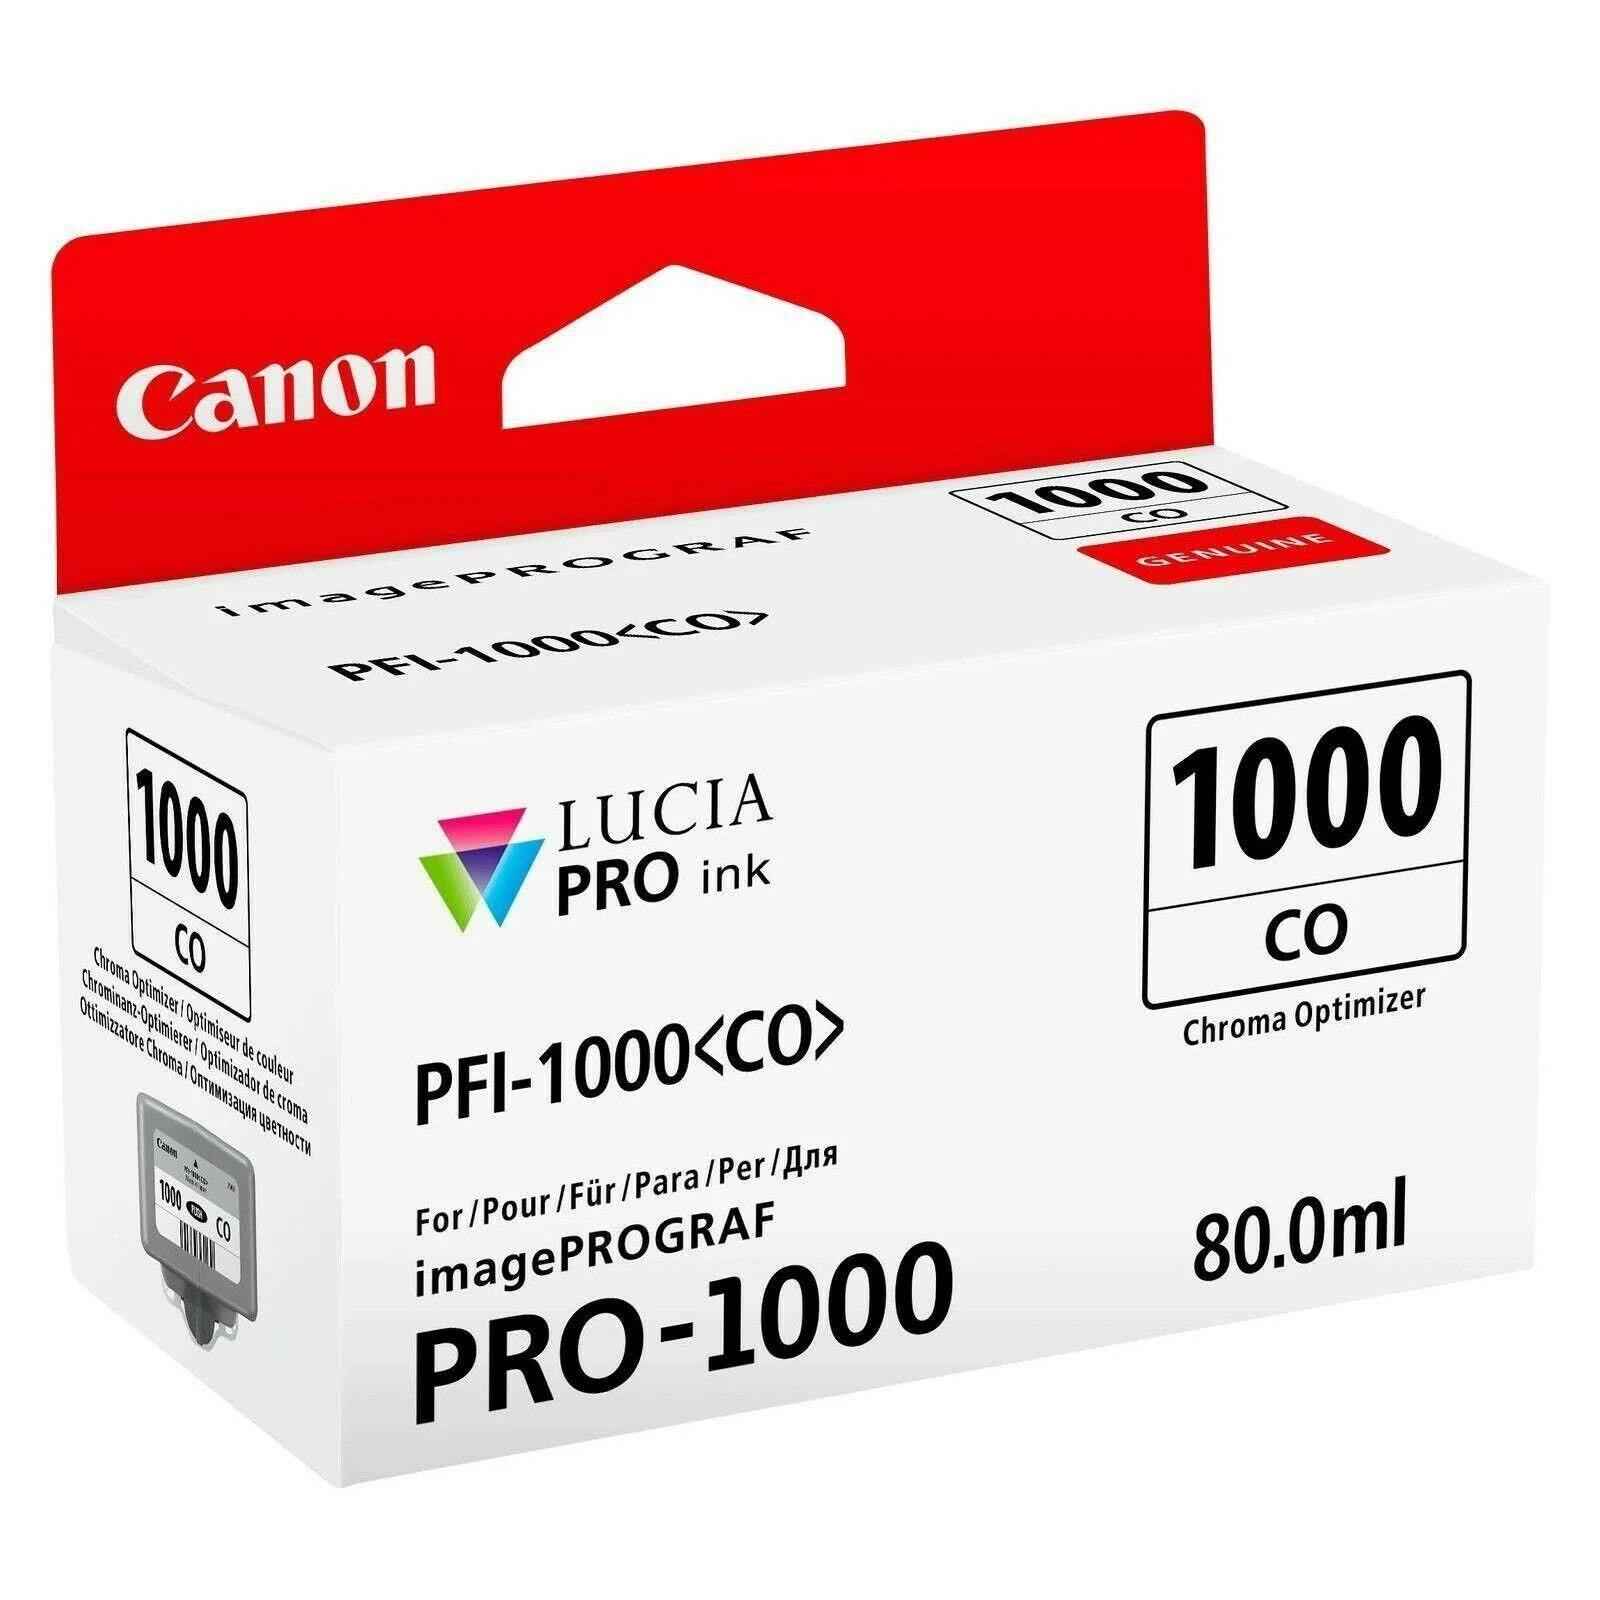 Canon Ink Cartridge Transparent for imagePROGRAF PRO PFI-1000CO Chroma Optimizer